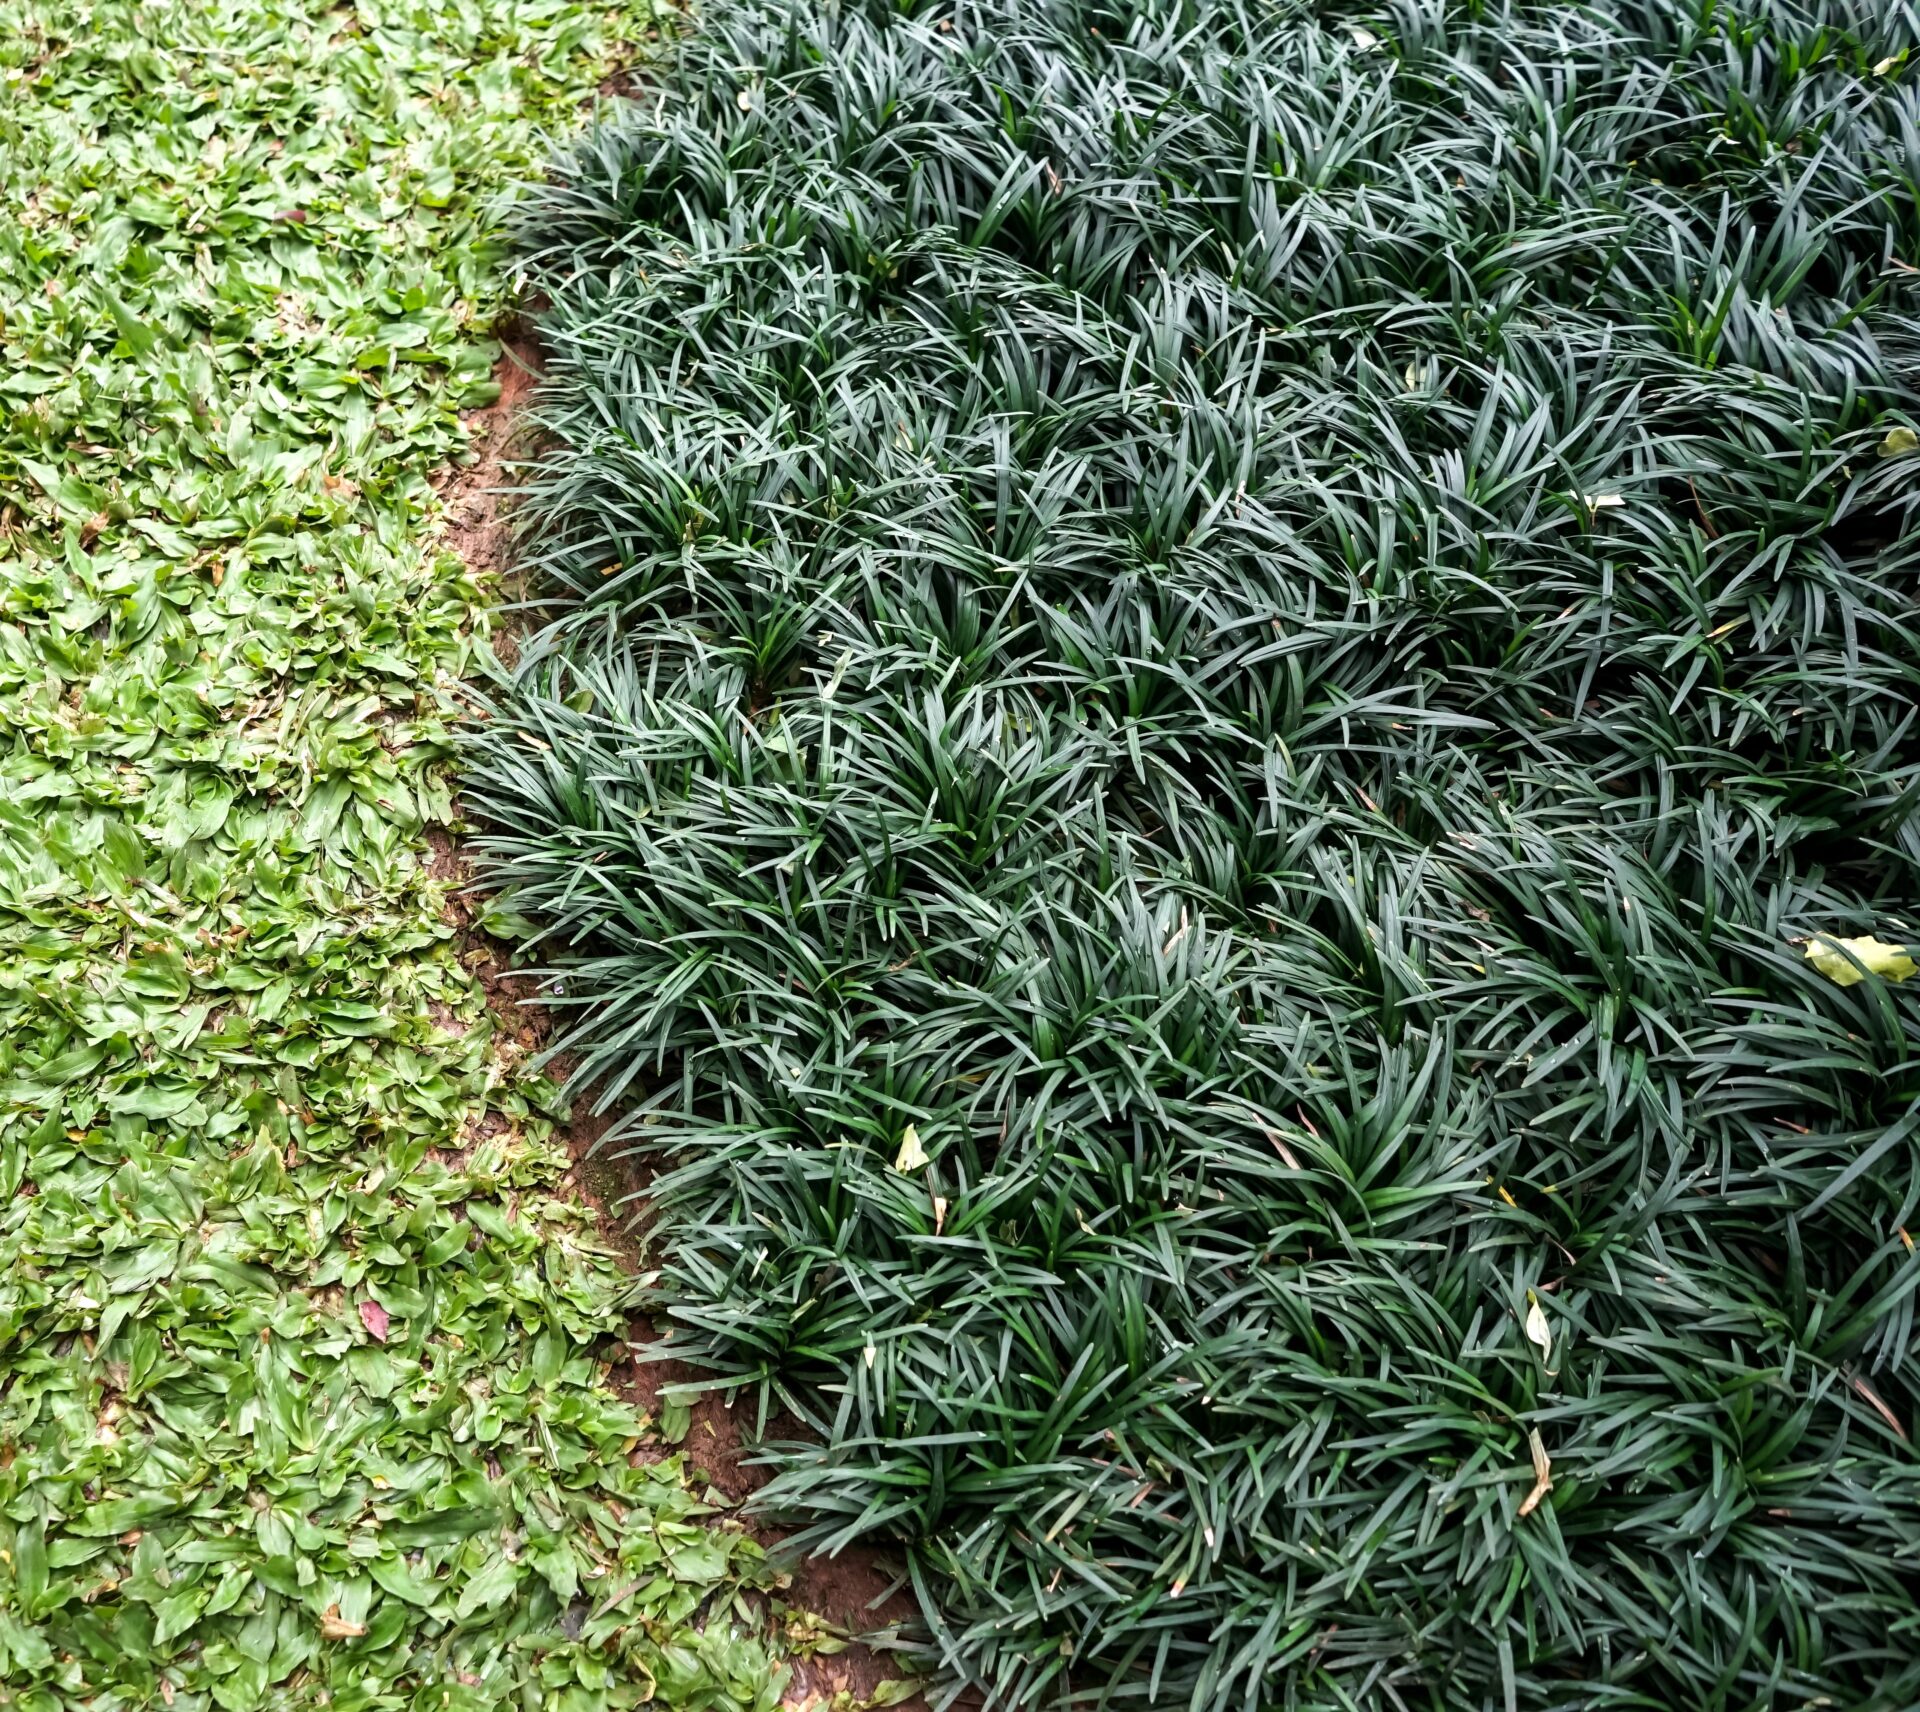 Mondo Grass as a groundcover and lawn alternative